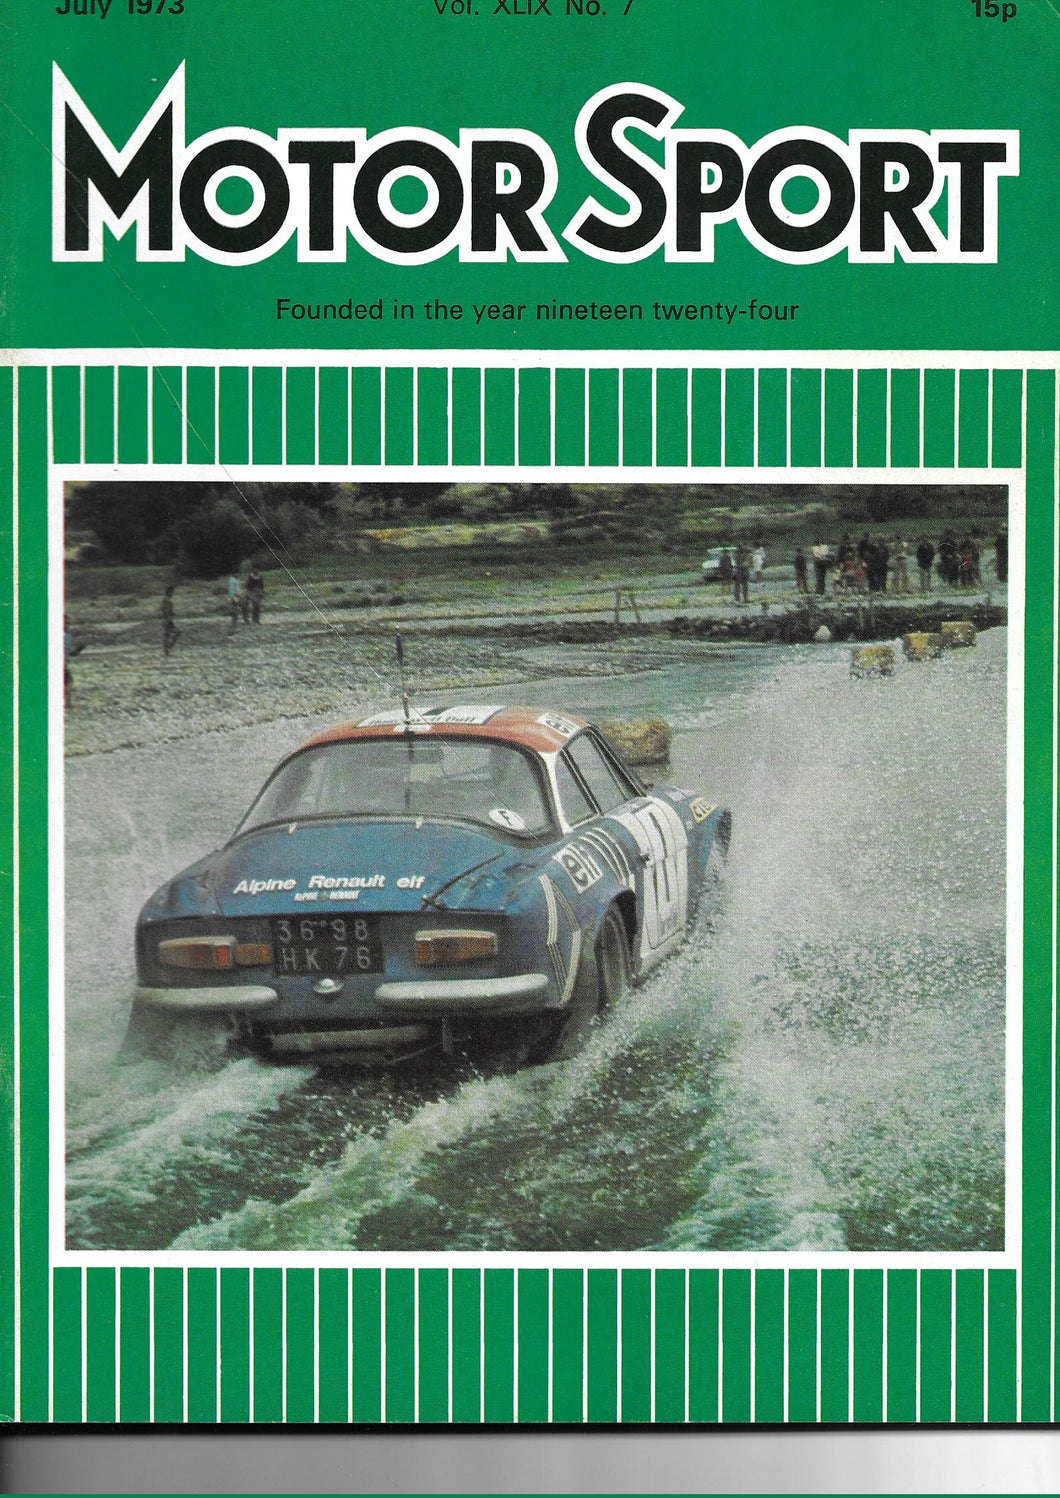 Motor Sport Magazine Vol XLIX no 7 July 1973